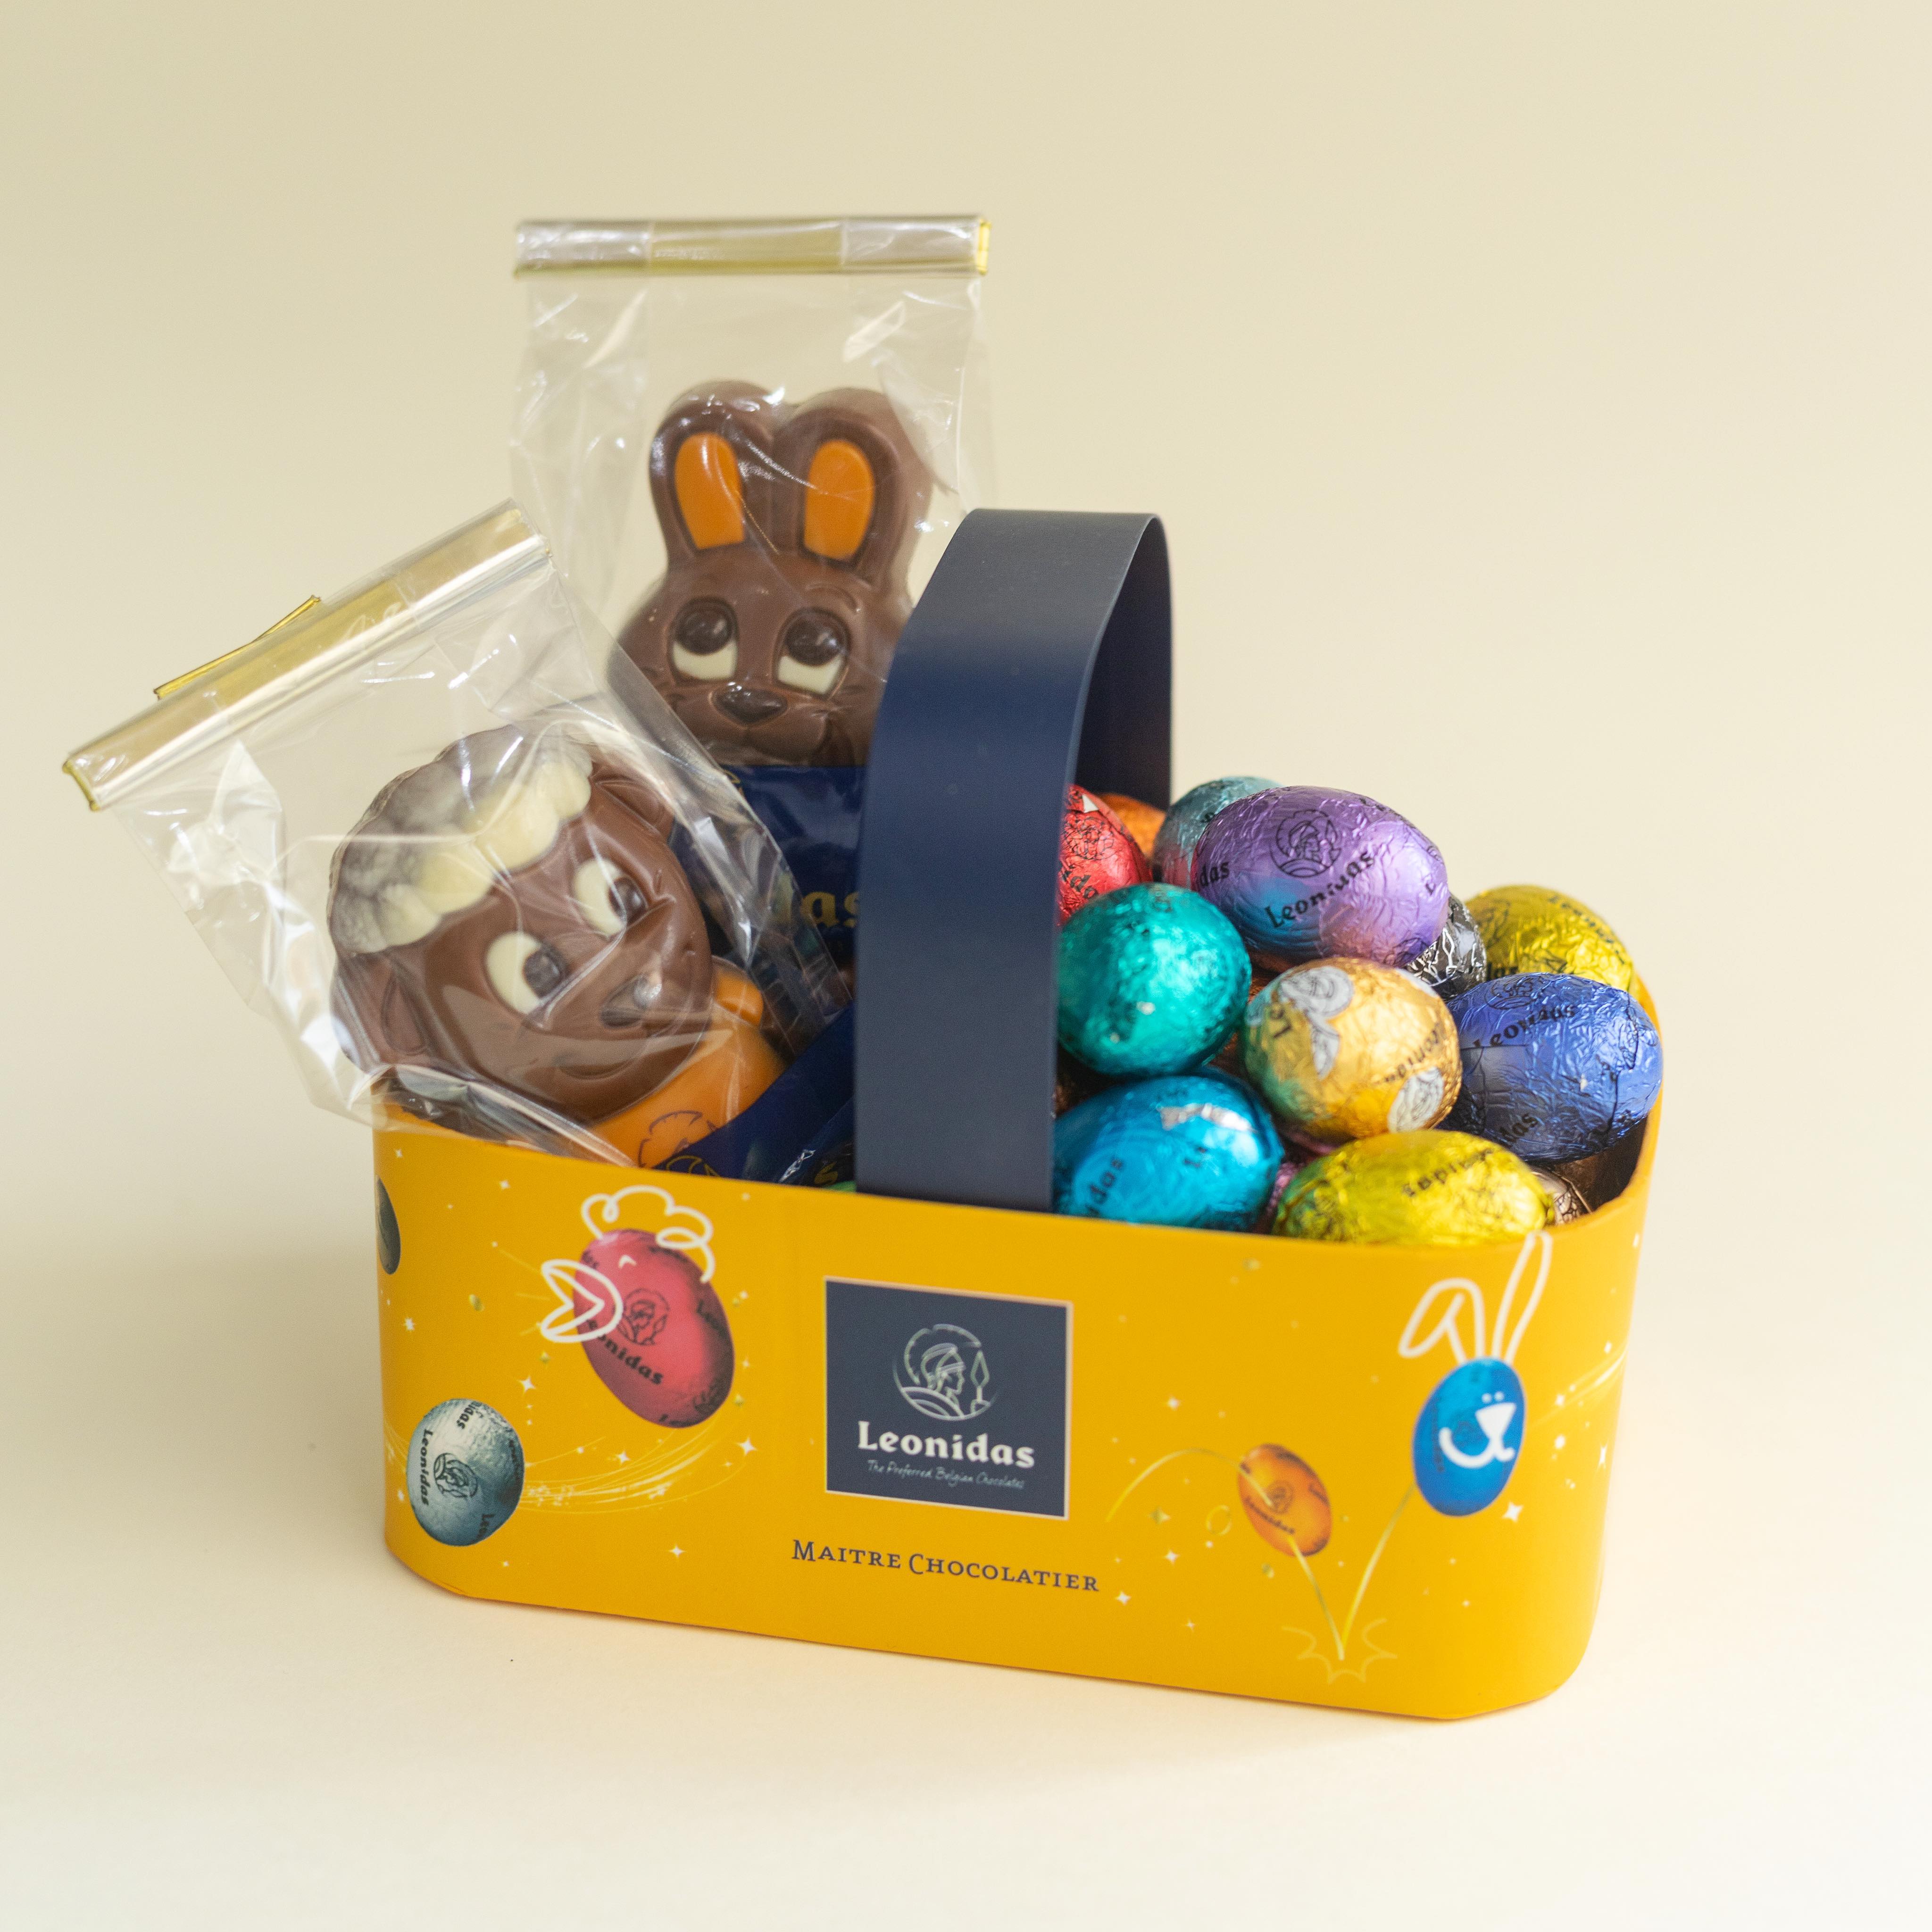 Пасха не за горами, а Leonidas уже подготовили для Вас восхитительную коллекцию пасхального шоколада!🍫От милых шоколадных кроликов до красочных пасхальных яиц, наши шоколадные изделия станут идеальным подарком для ваших близких в этом сезоне.📍Не ждите, заходите в наш магазин и покупайте пасхальные угощения уже сегодня!АДРЕС: ул.Sfatul Țării 15______________Paștele este chiar după colț, iar Leonidas ți-a pregătit deja o colecție delicioasă de ciocolate de Paște!🍫De la iepurași drăguți de ciocolată la ouă de Paște colorate, ciocolata noastră este cadoul perfect pentru cei dragi în acest sezon. 📍Nu aștepta, vizitează magazinul nostru și cumpără azi deliciile de Paște! ADRESA: str.Sfatul Țării 15